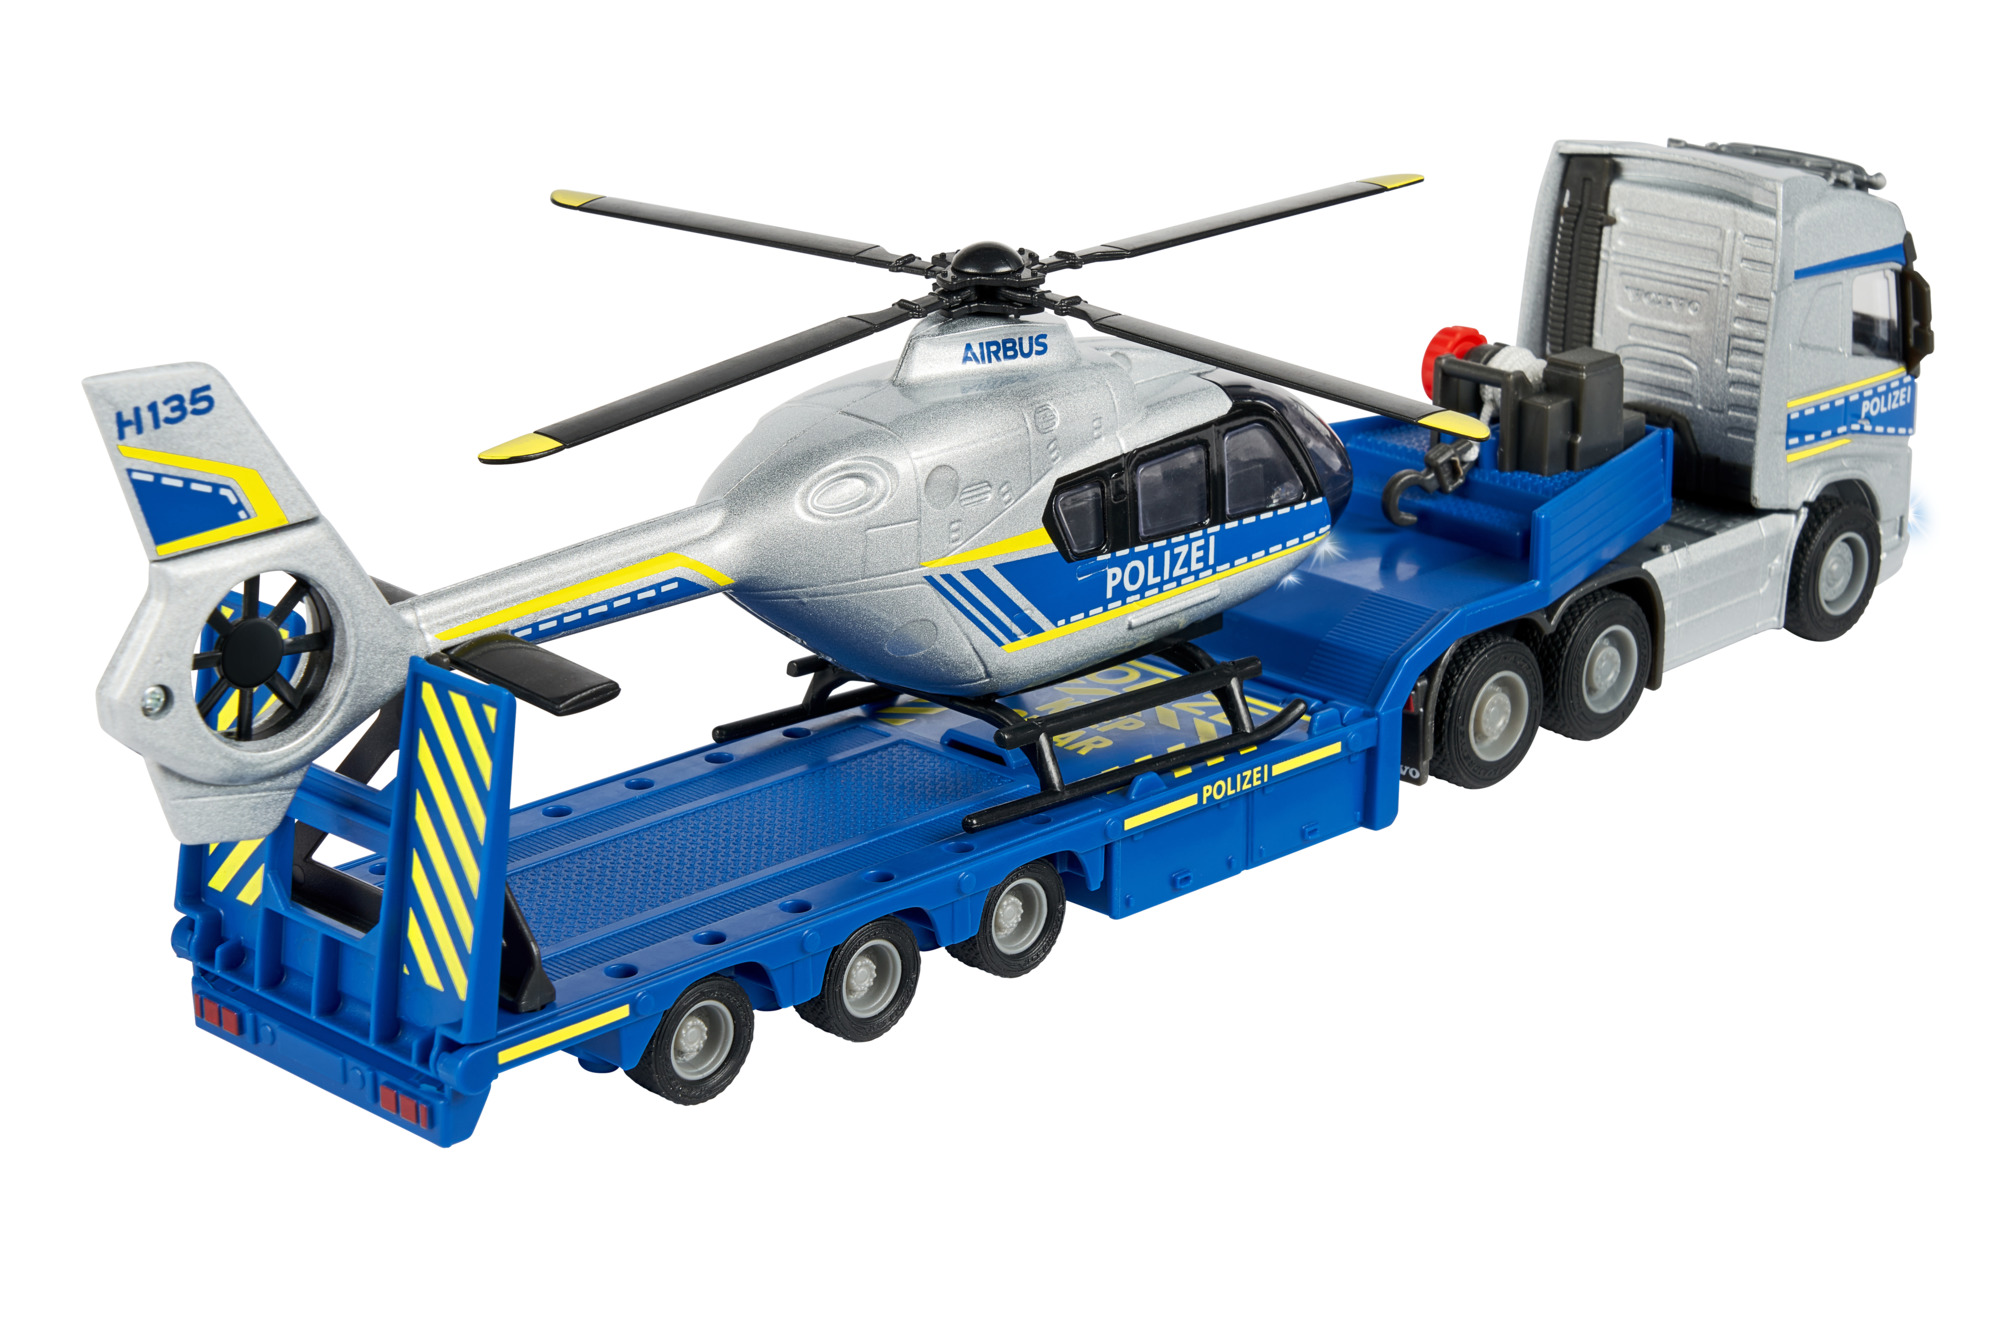 Airbus Police Spielzeugauto Mehrfarbig Volvo Helicopter + Truck MAJORETTE